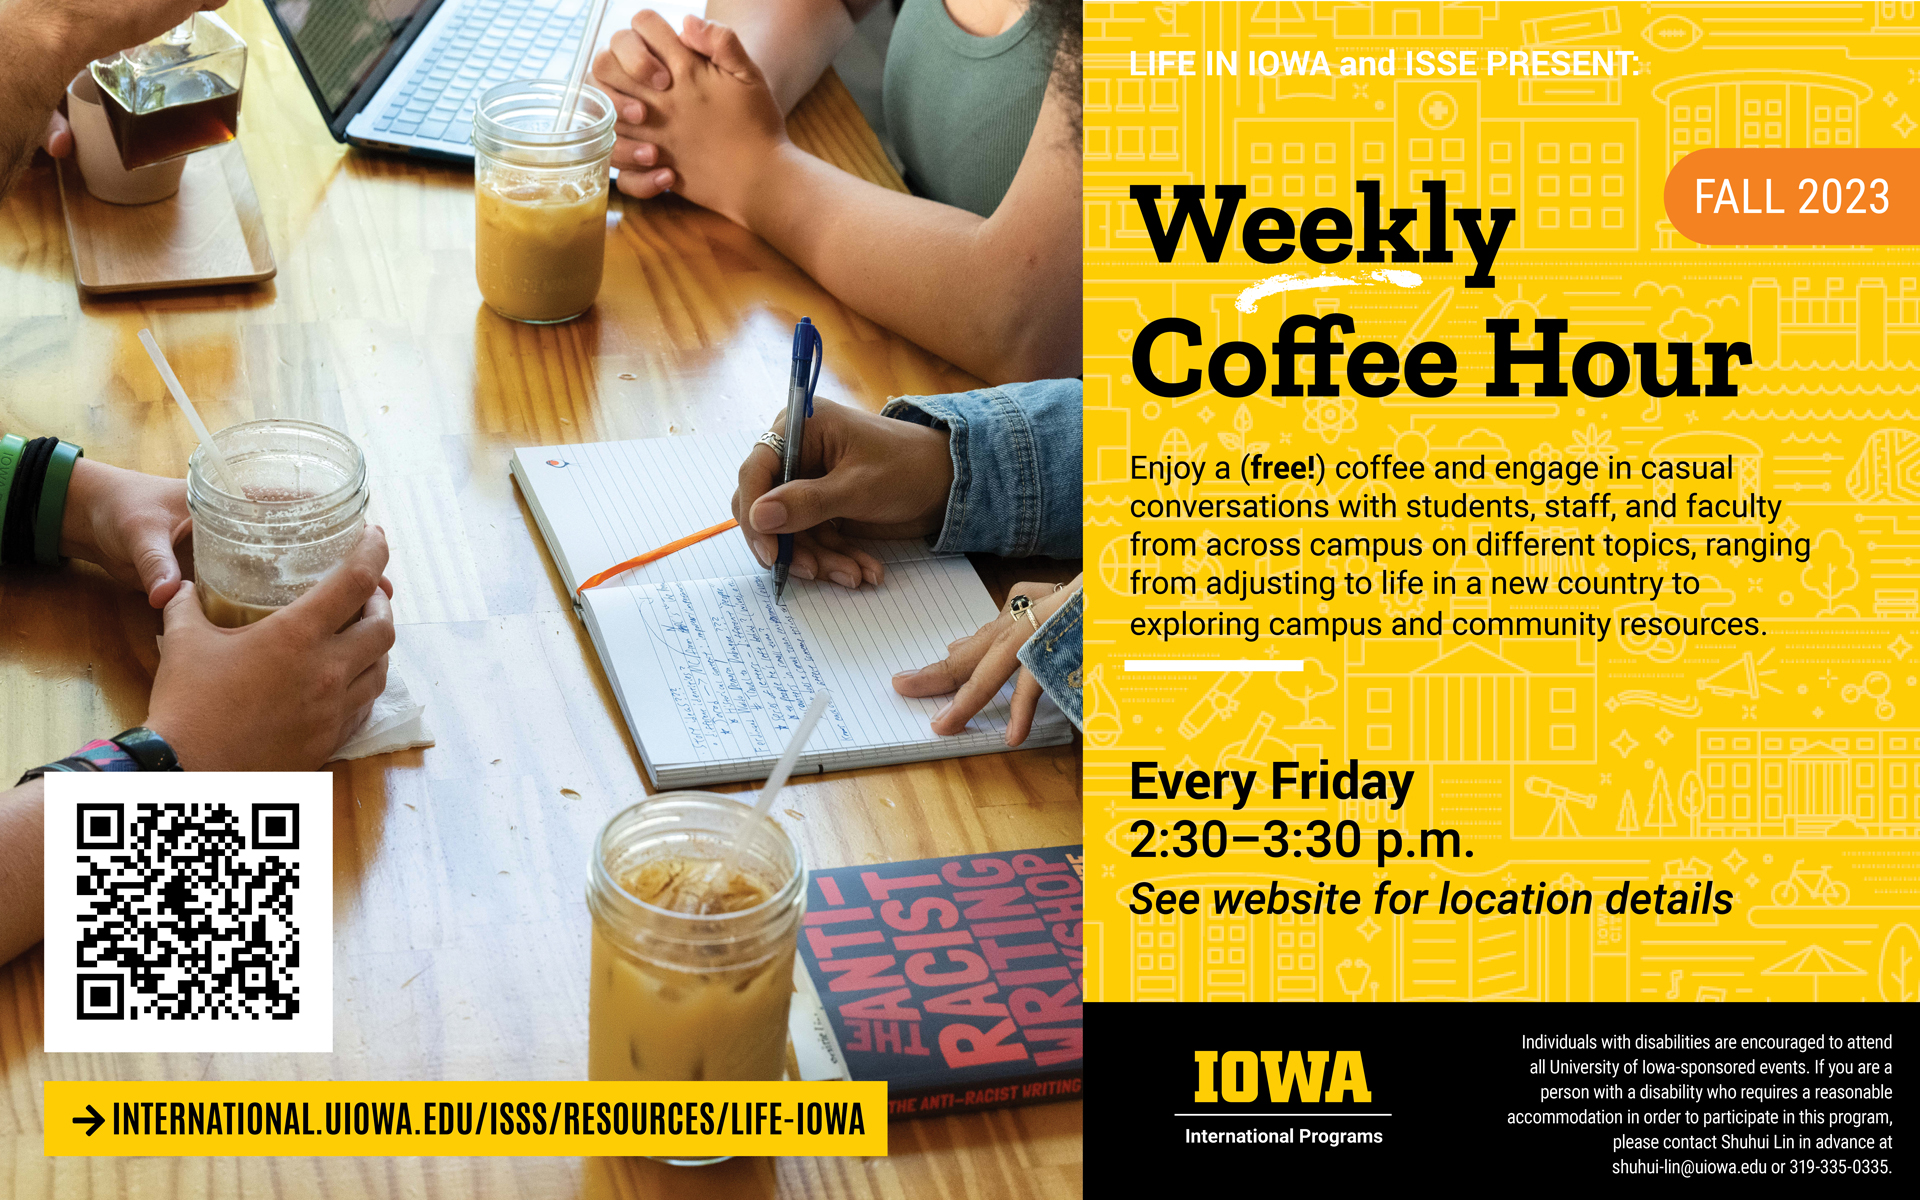 International Programs Weekly Coffee Hour: Every Friday 2:30-3:30